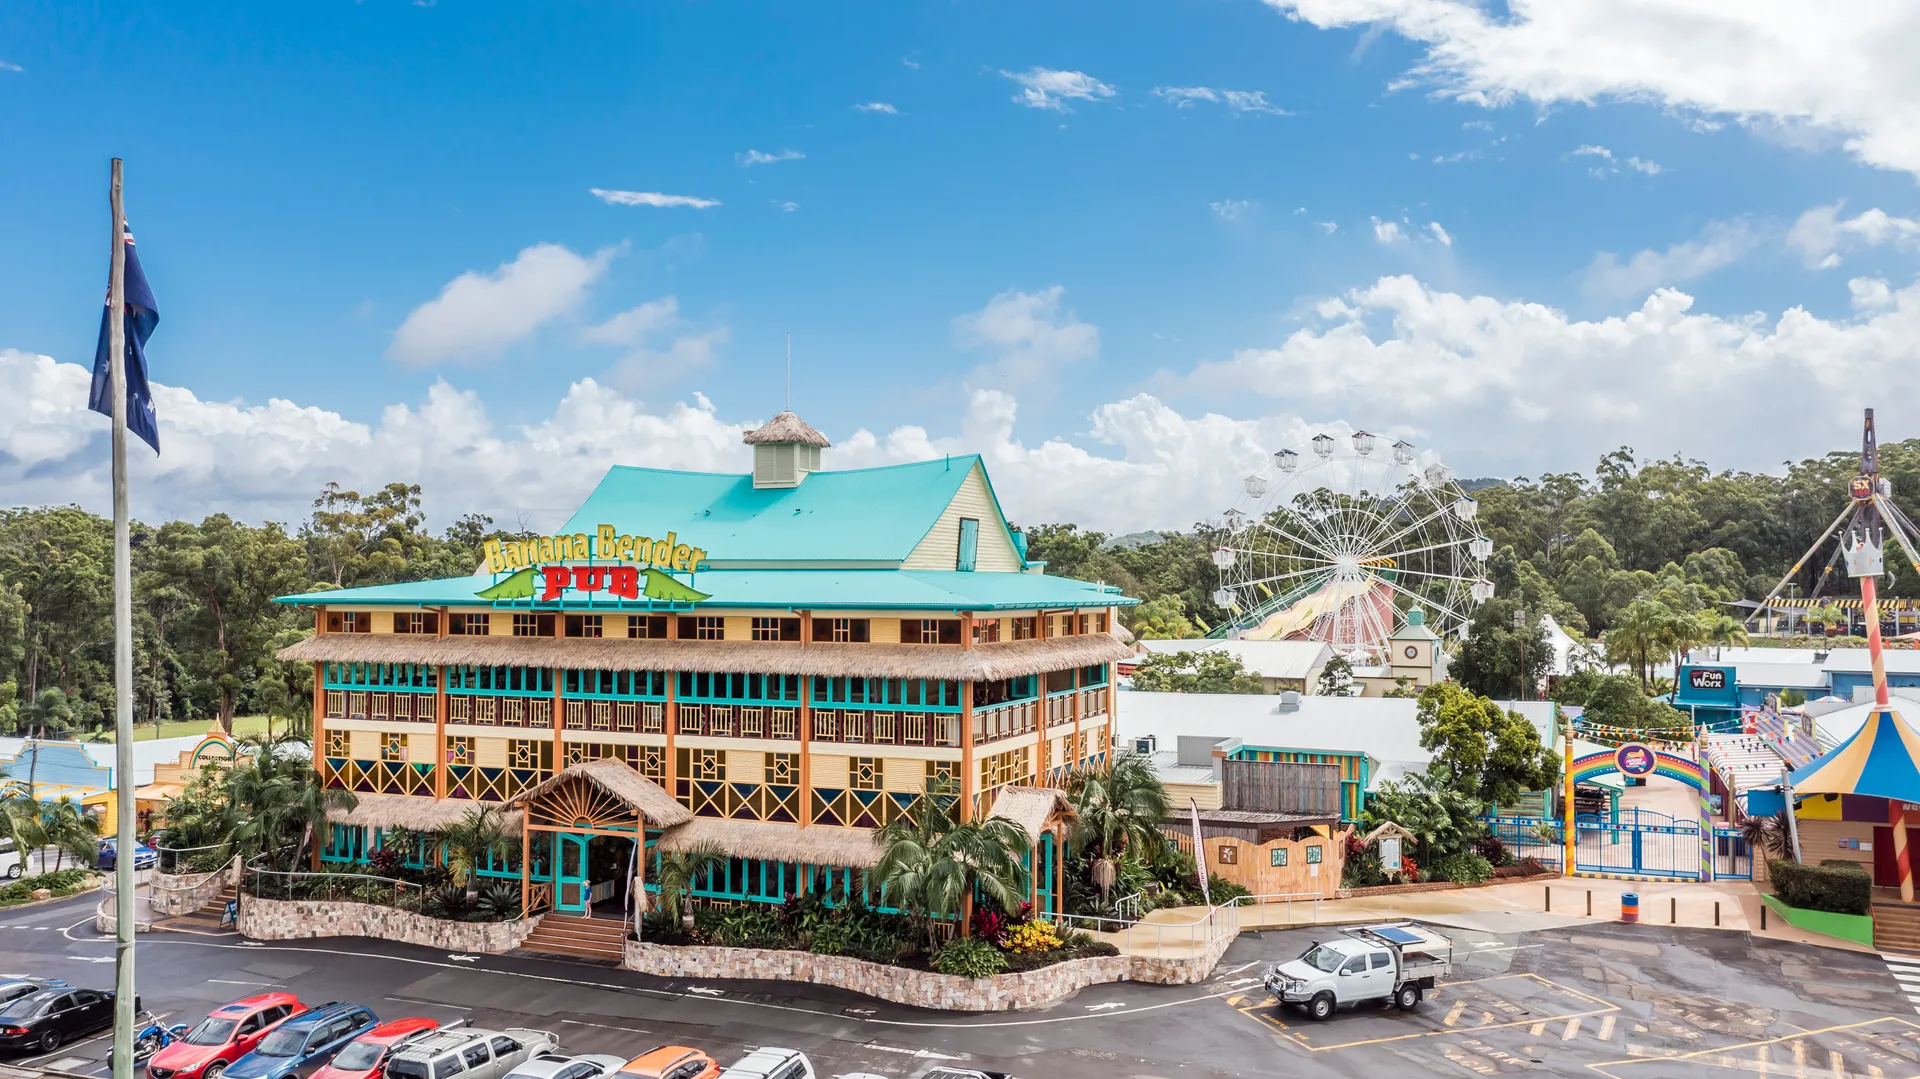 View of the Banana Bender Pub and Aussie World. Visit Sunshine Coast